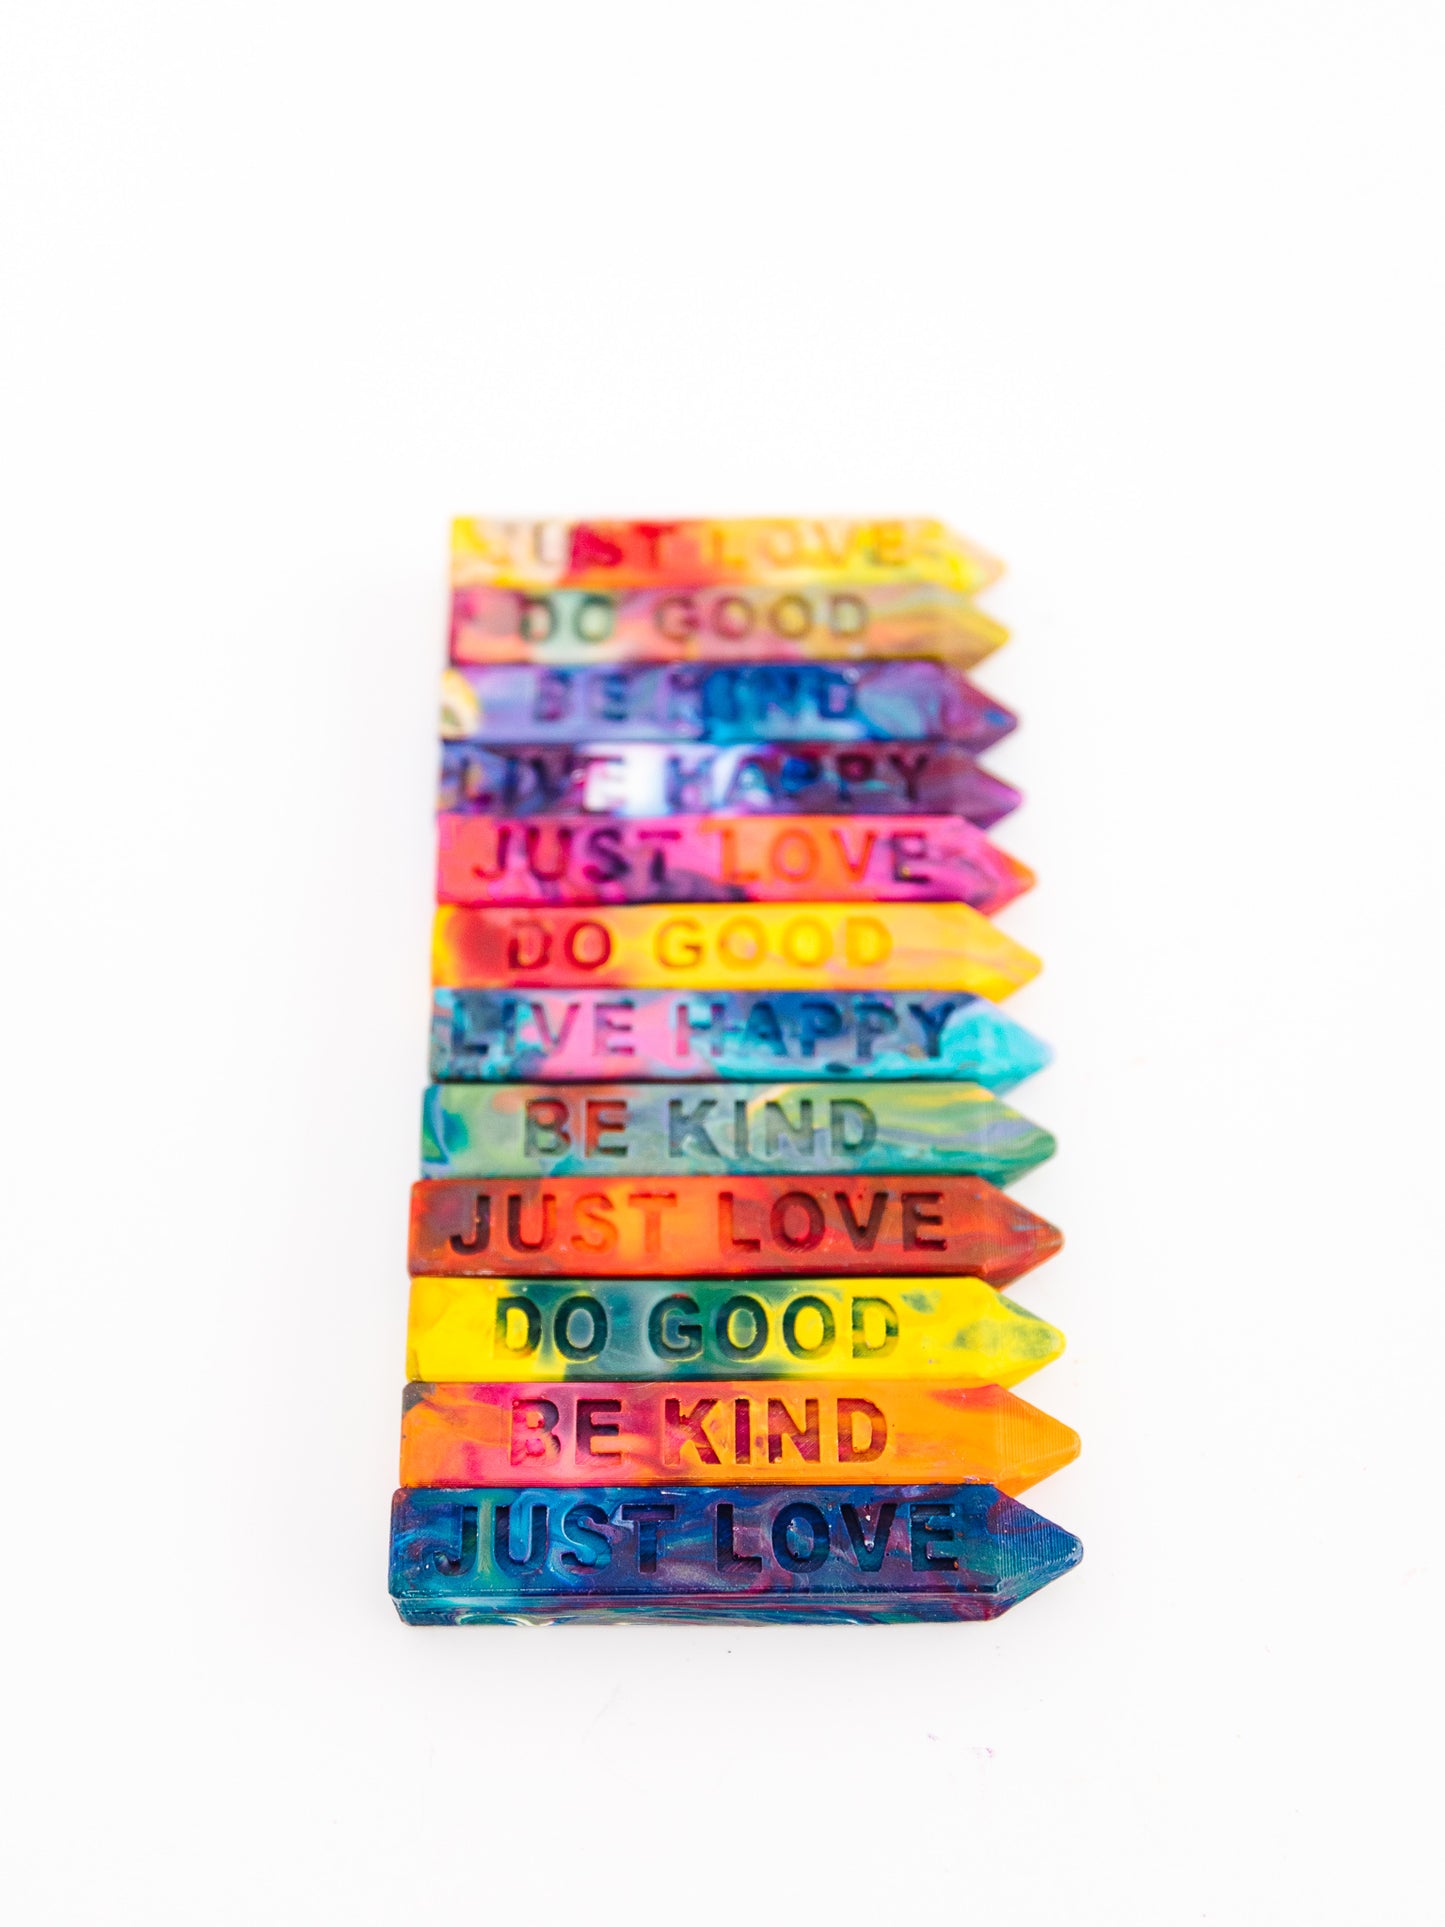 Rainbow Crayon Stix® Classroom Valentines  Such a unique class favor! –  Art 2 the Extreme® - The Original Rainbow Crayon®